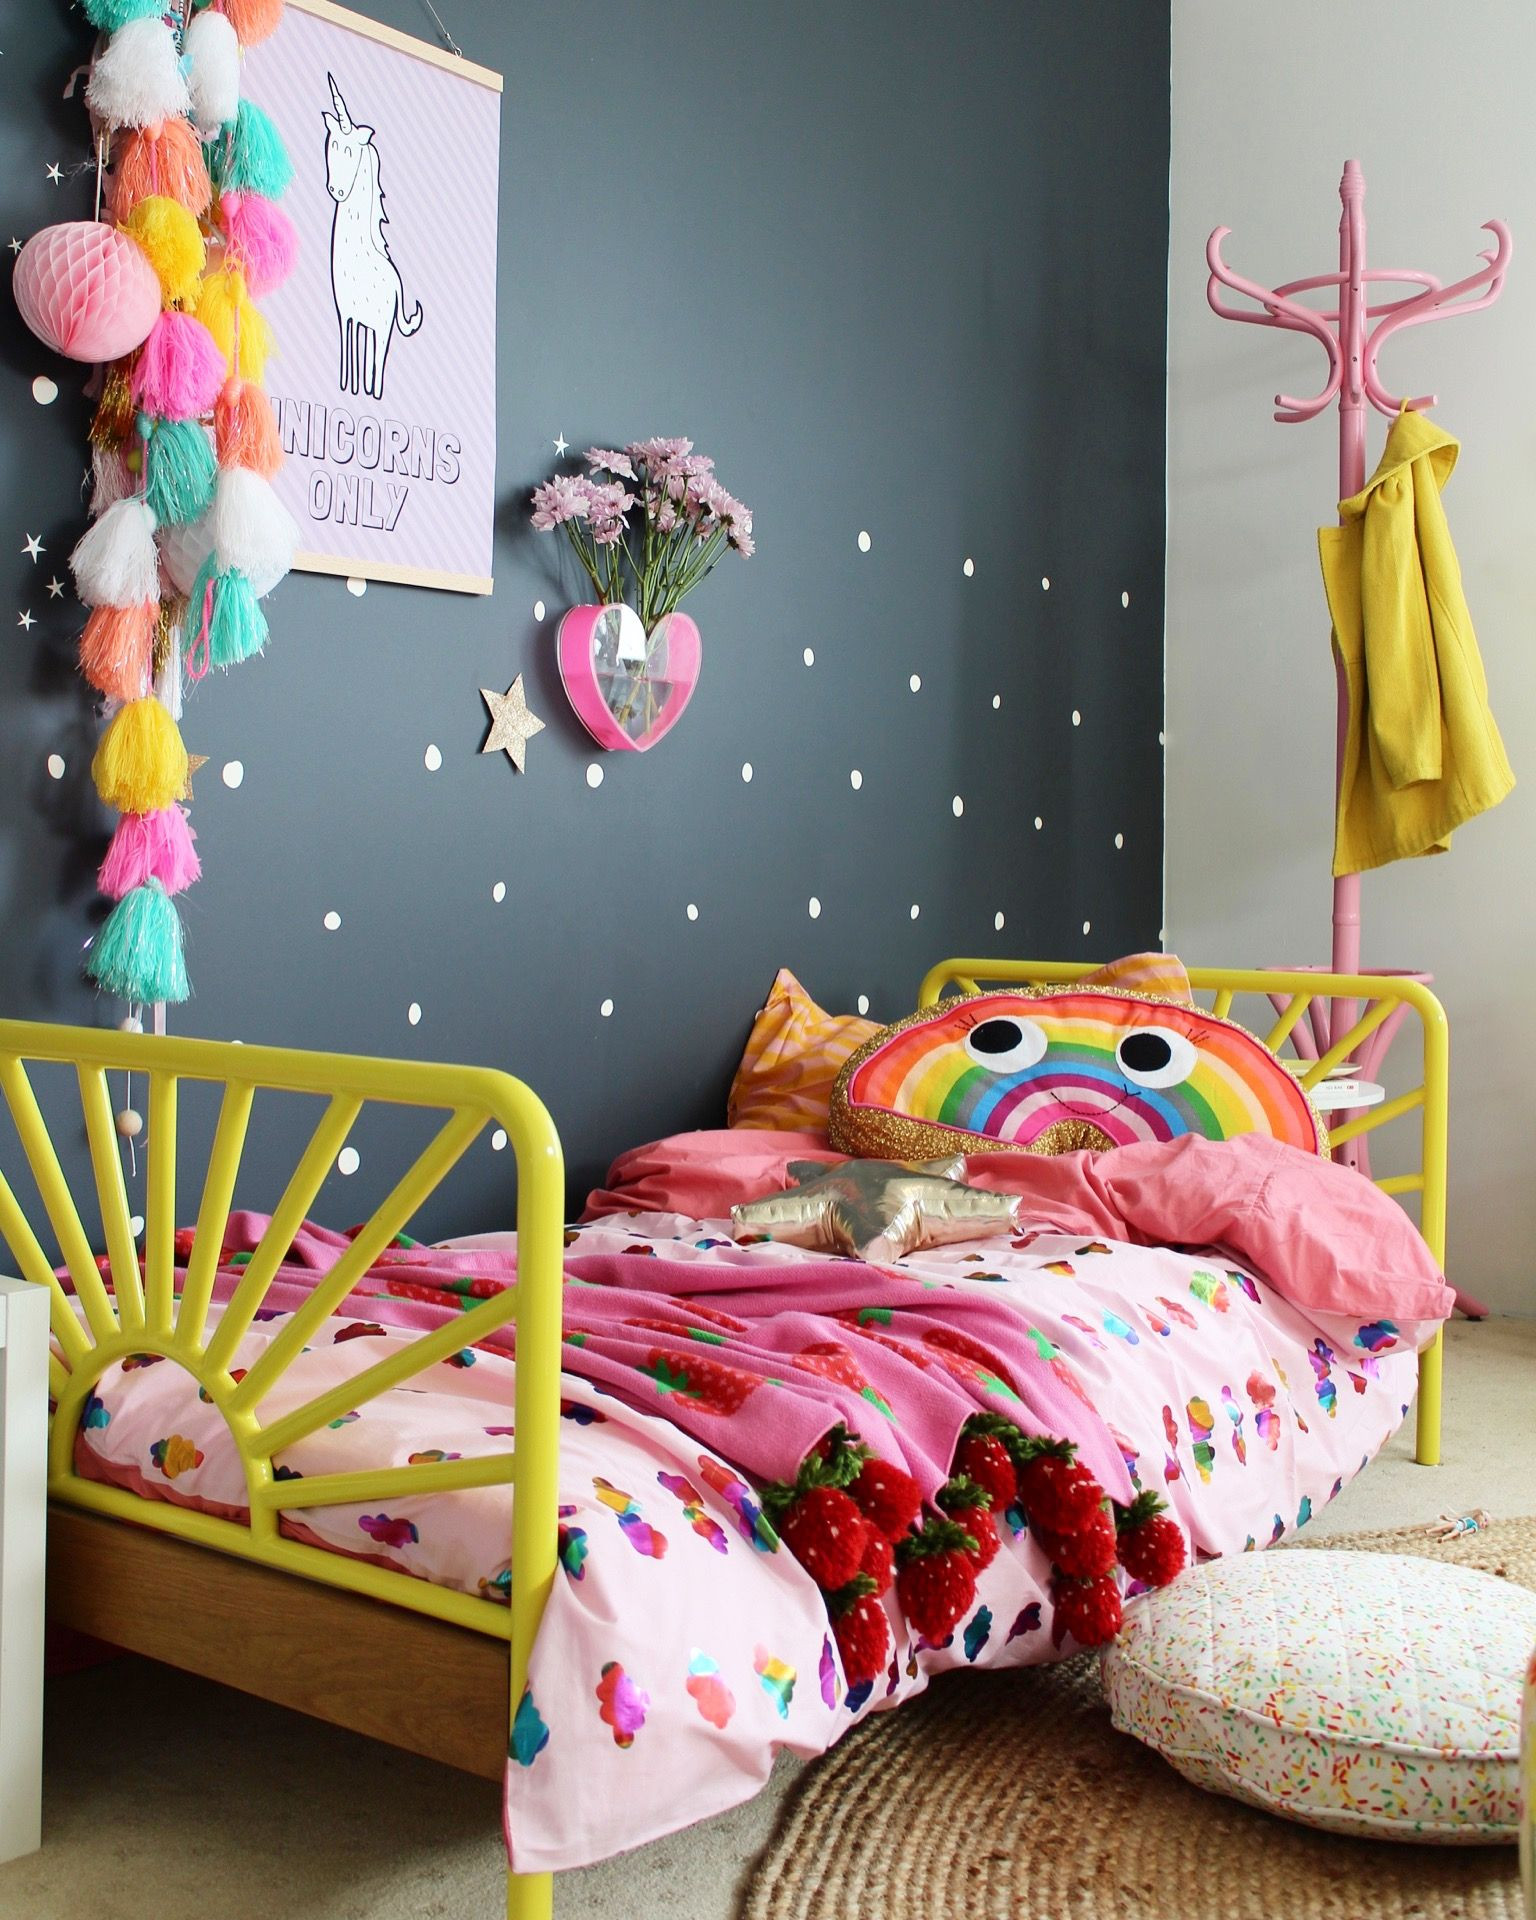 DIY Kids Bedroom Ideas
 25 Amazing Girls Room Decor Ideas for Teenagers